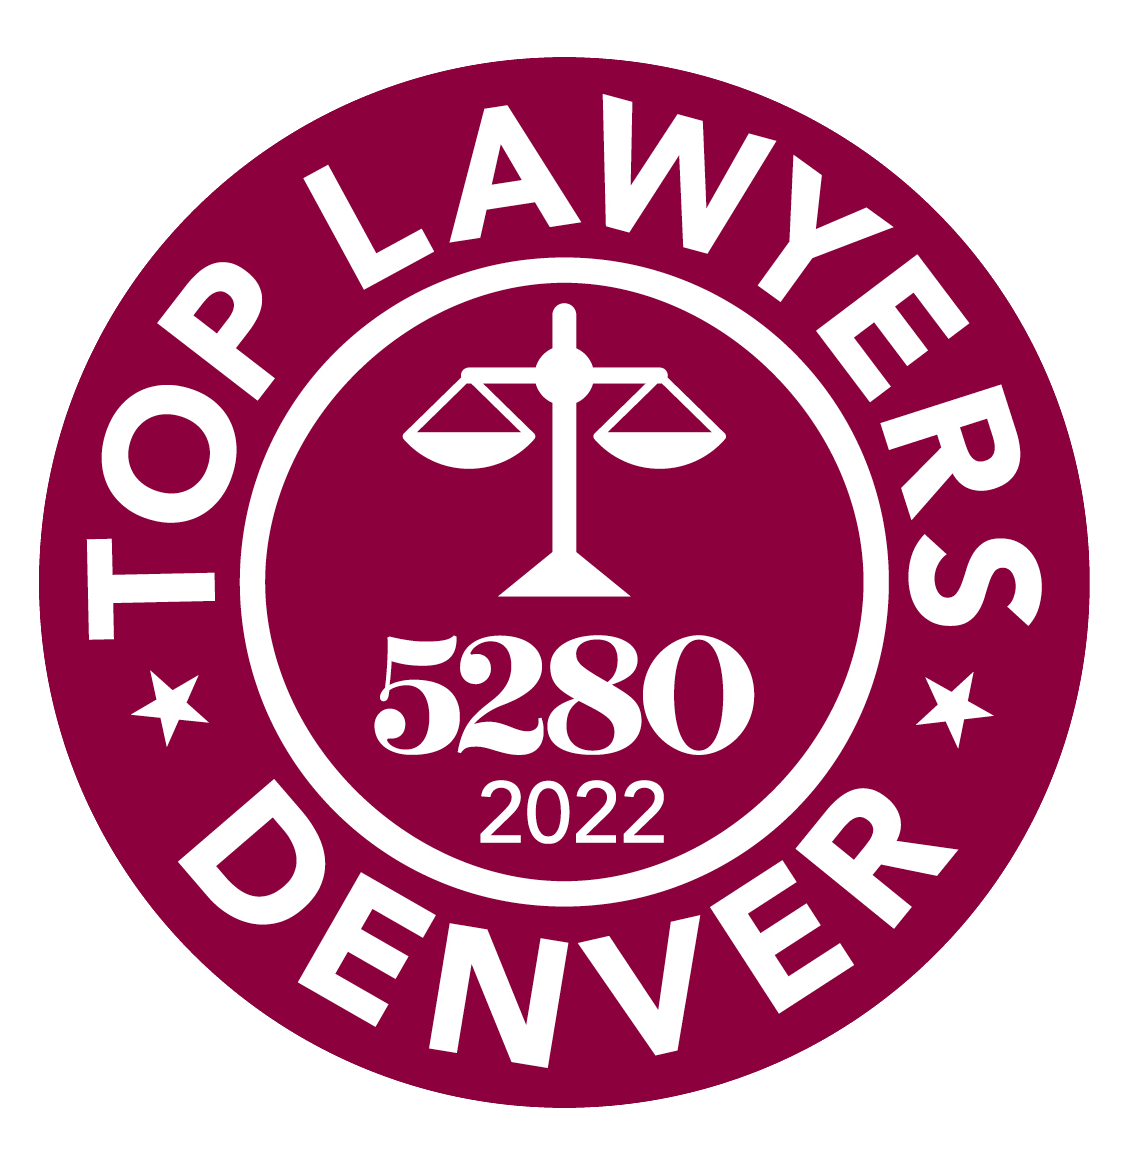 Top Lawyers Denver 5280 2022 Award - Legal Help In Colorado